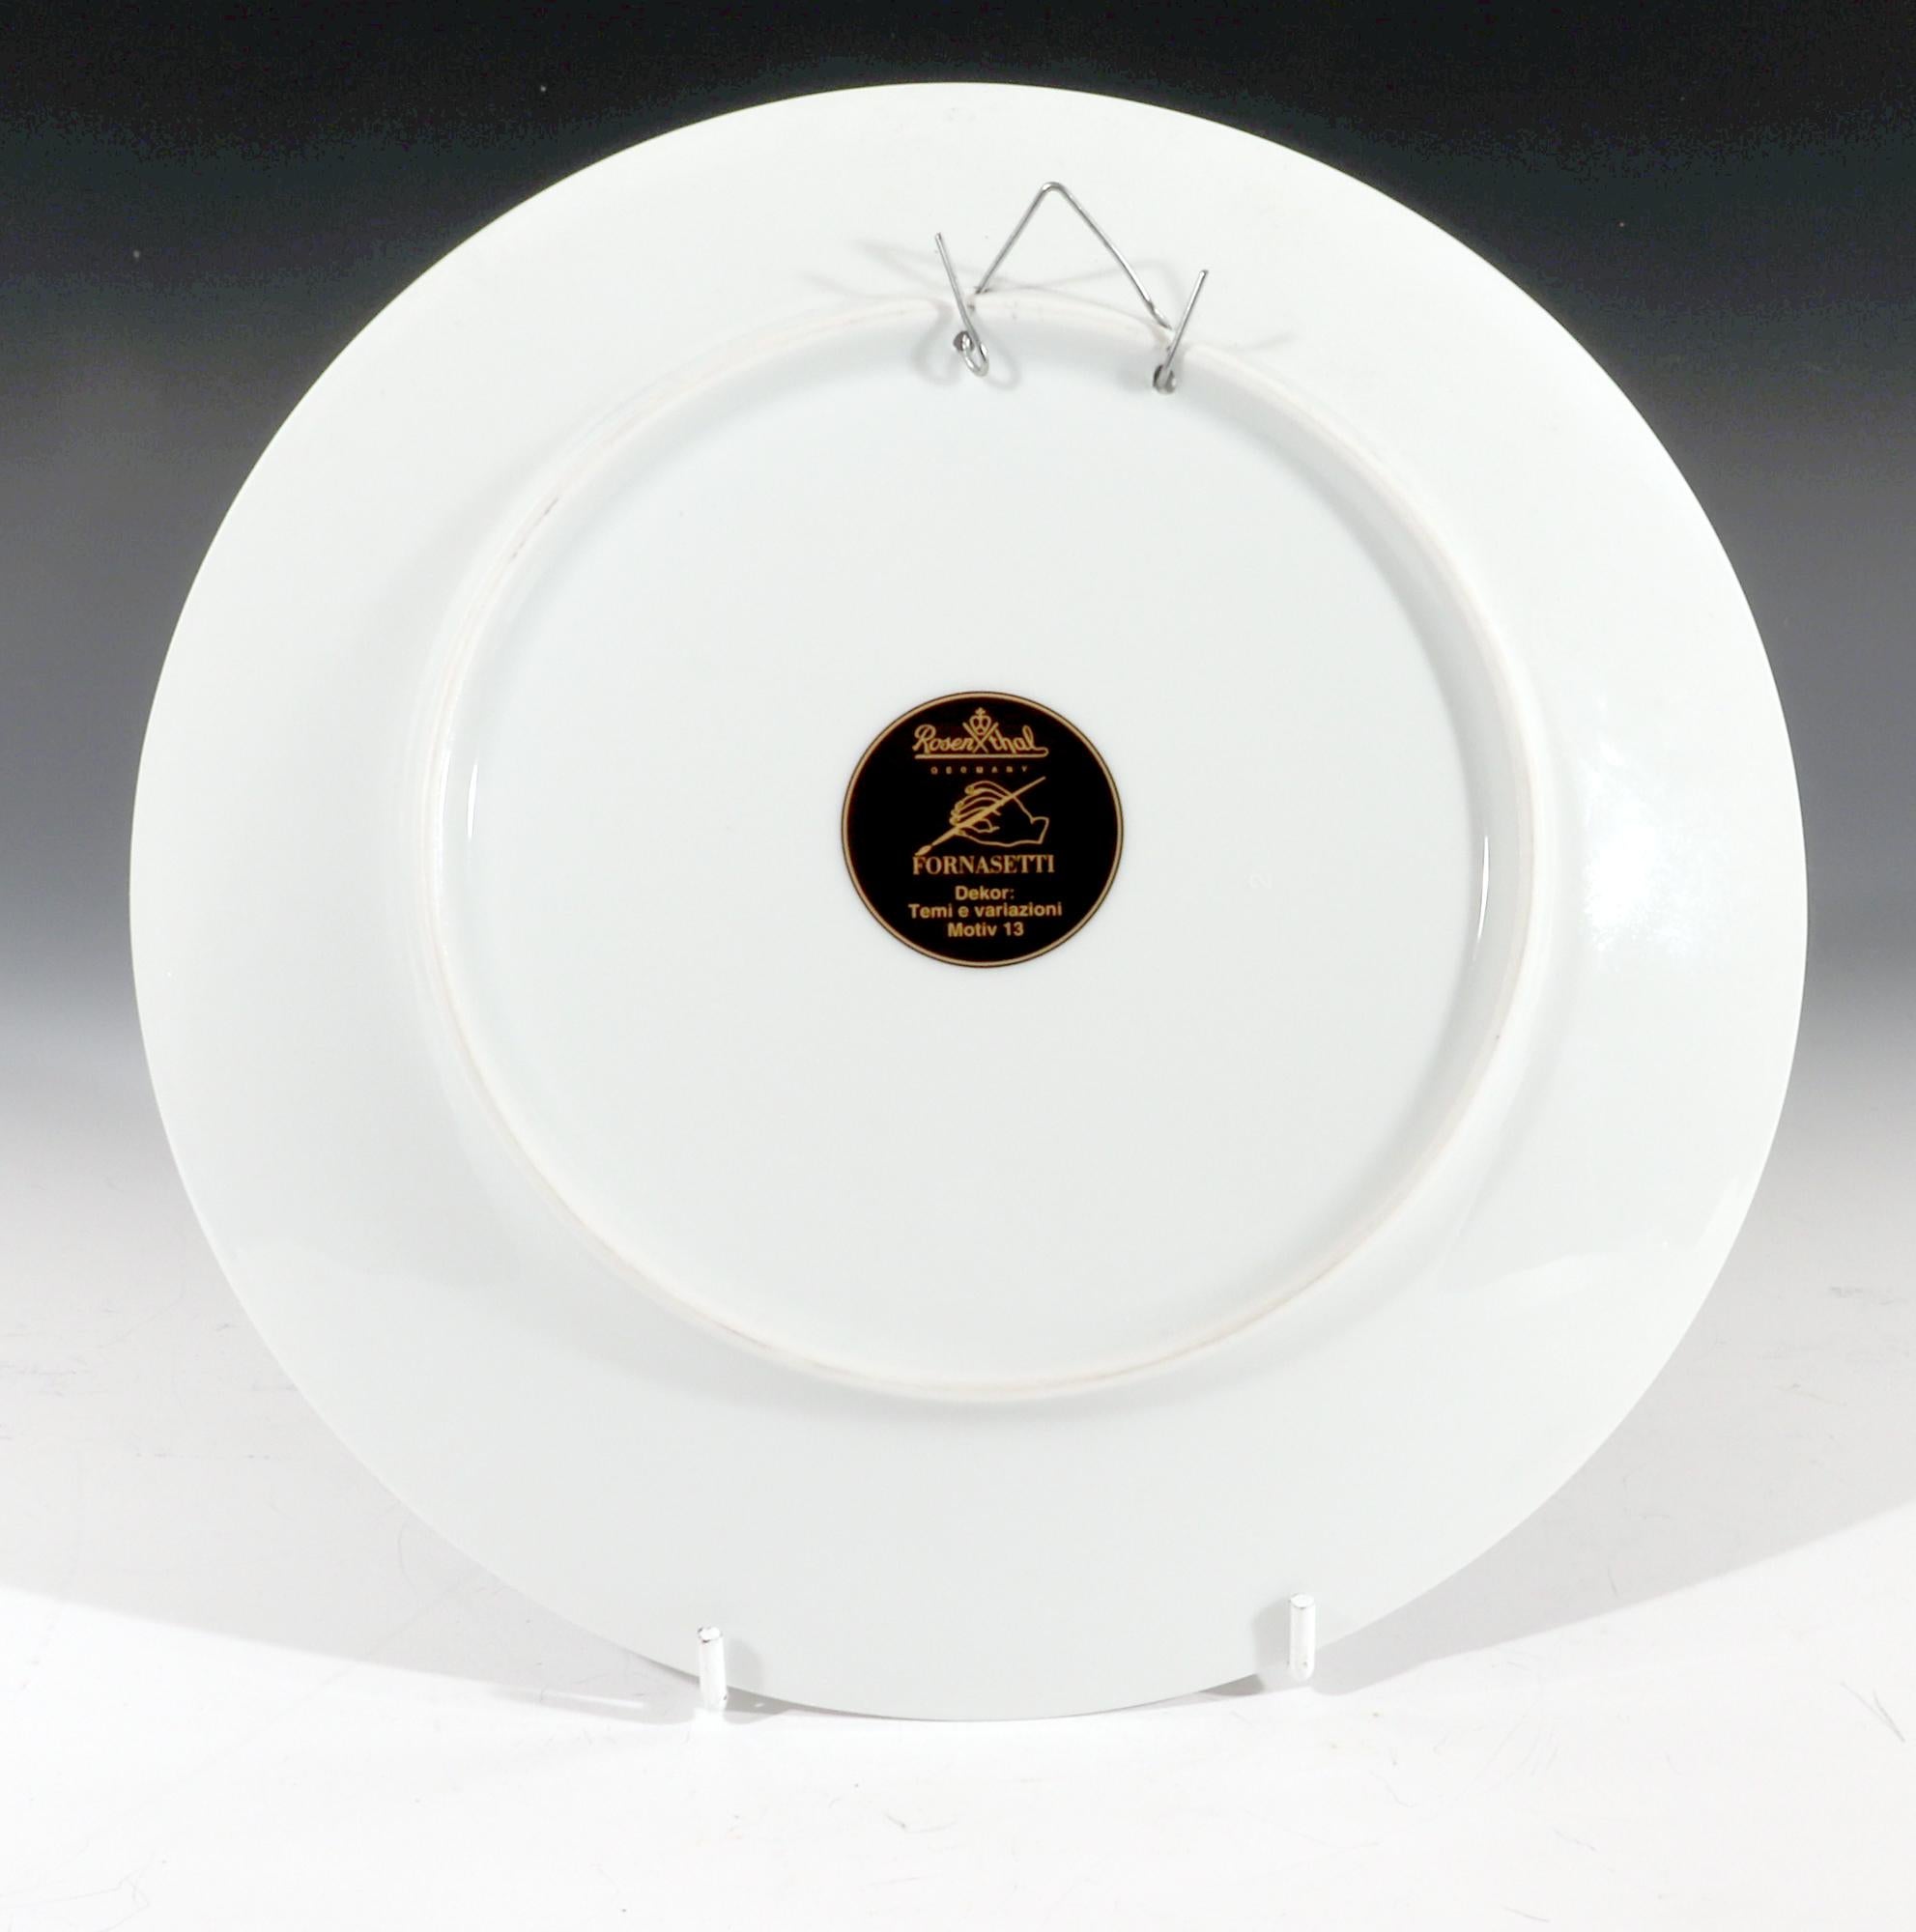 Piero Fornasetti Rosenthal Porcelain Themes & Variations - Buttons, Motiv 13 For Sale 1